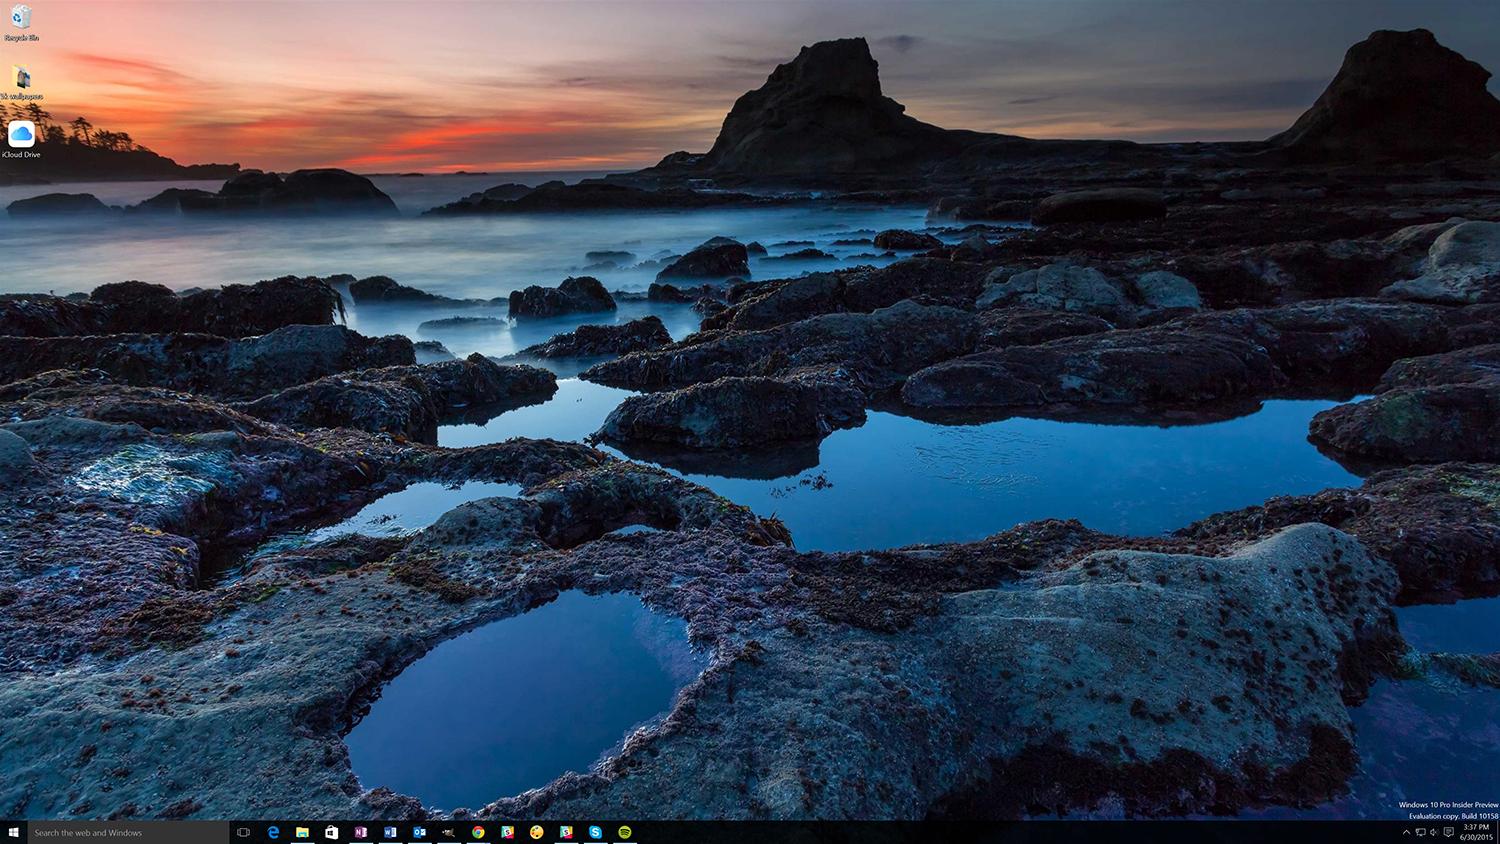 Windows 10 Pro Desktops